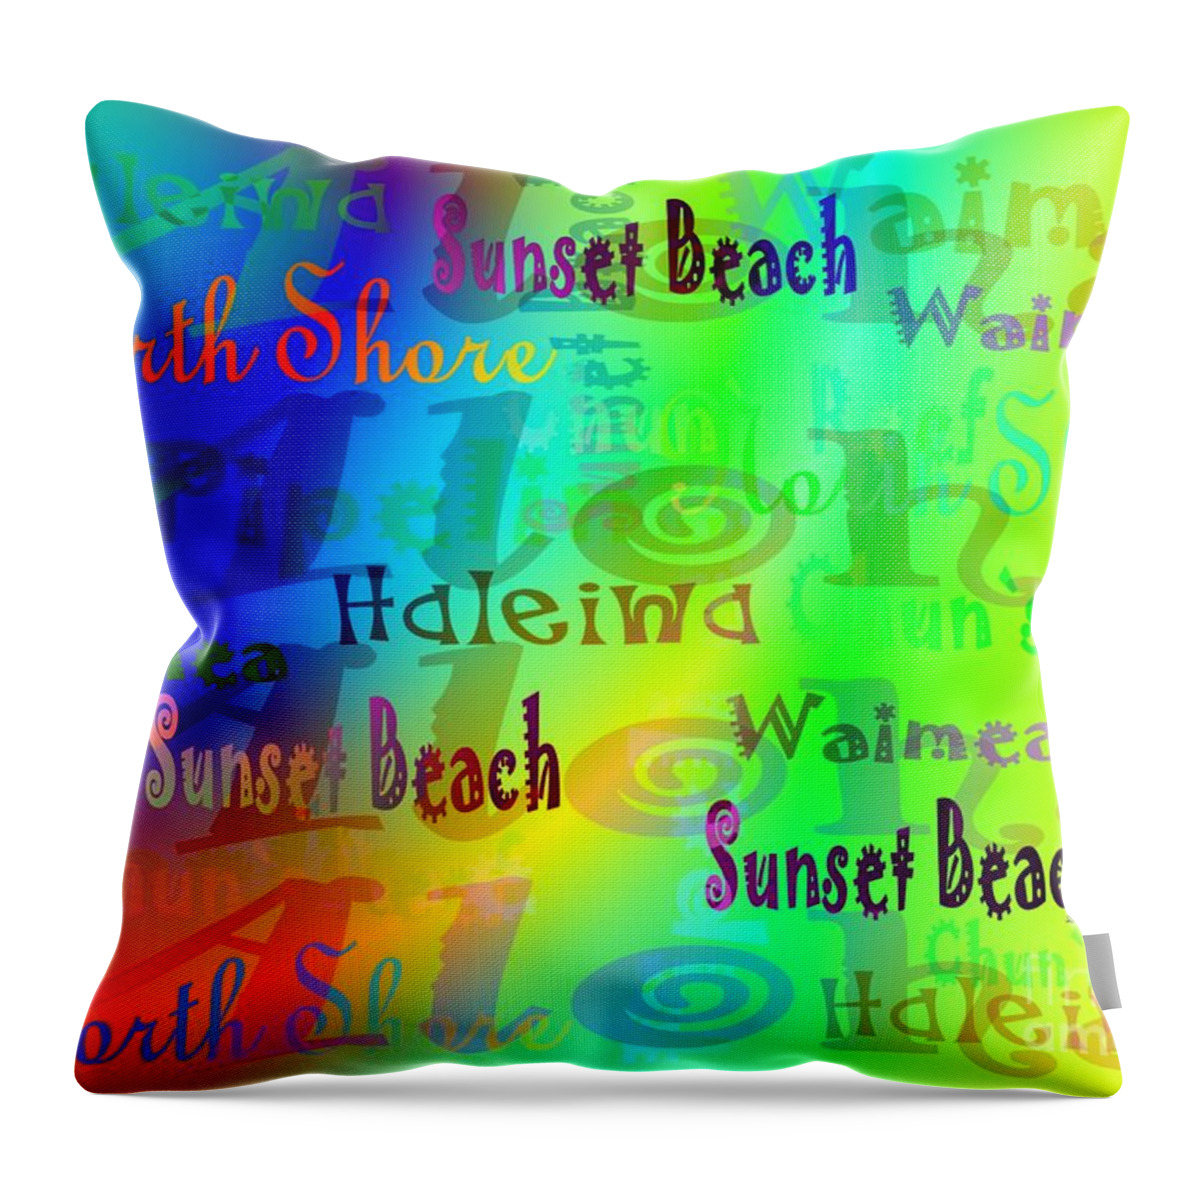 Hawaii Throw Pillow featuring the digital art North Shore Beaches by Dorlea Ho